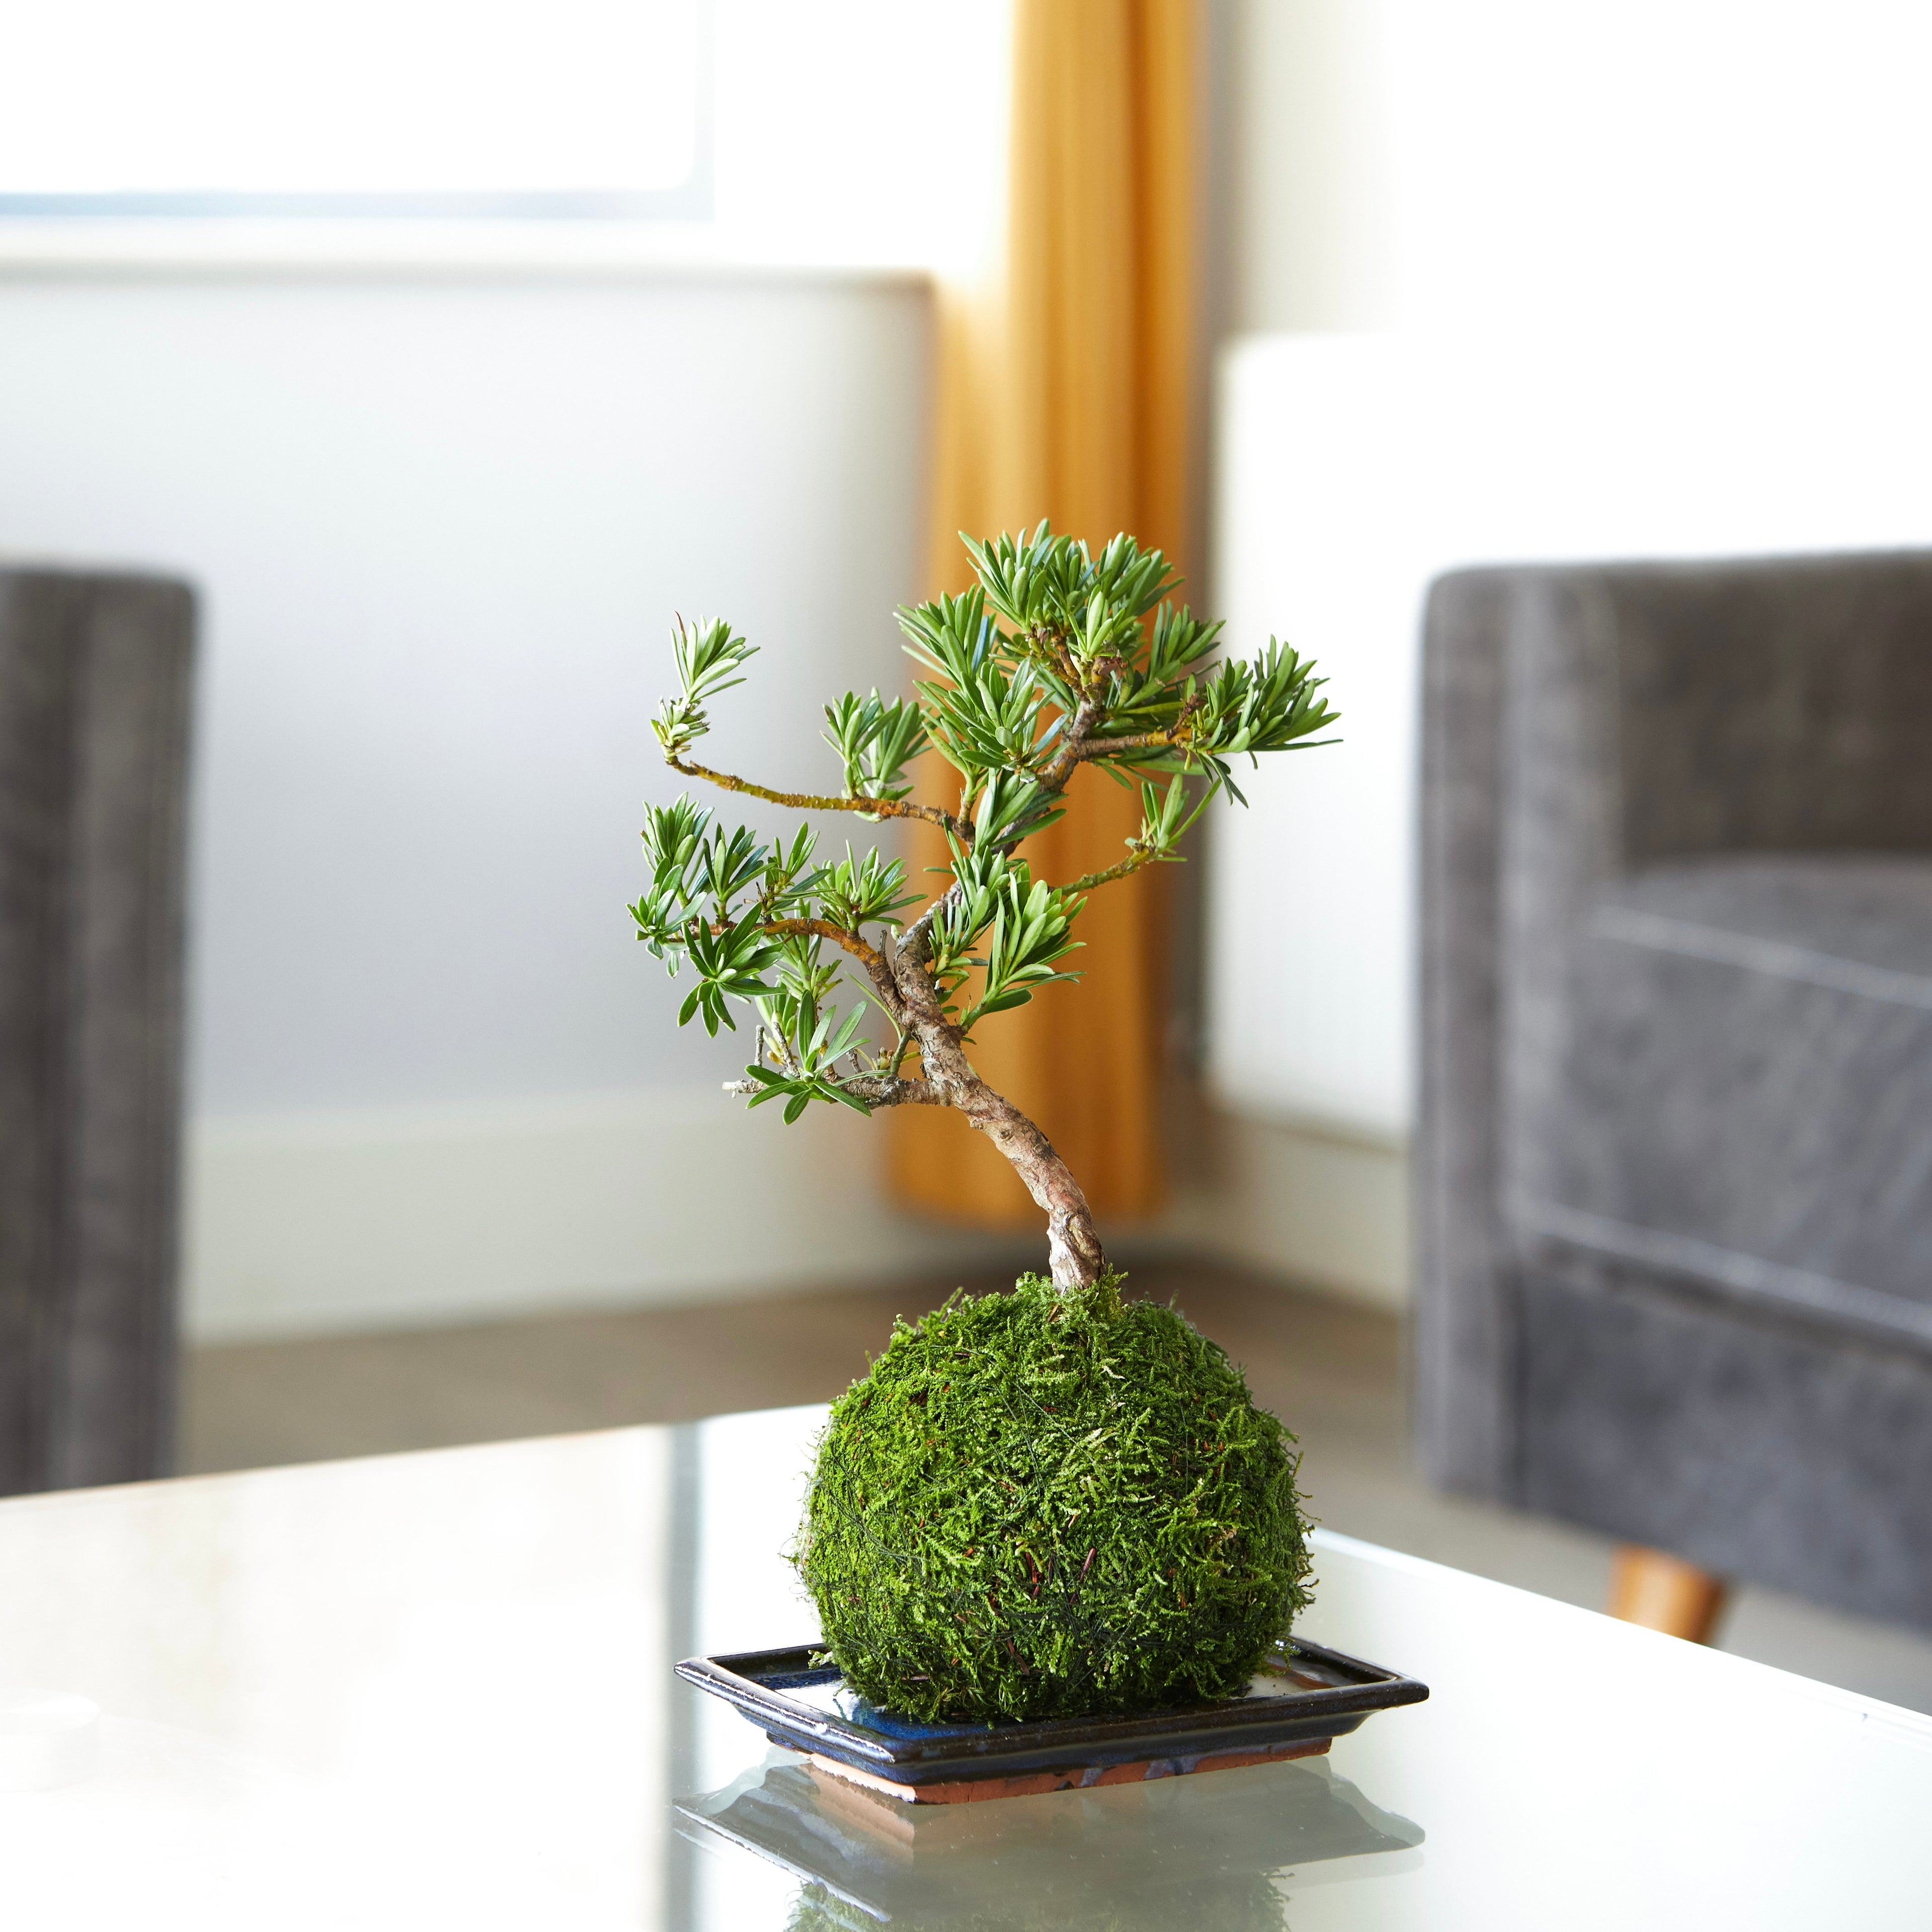 Buddhist Pine Bonsai Tree in moss ball Kokedama Houseplant by Tranquil Plants